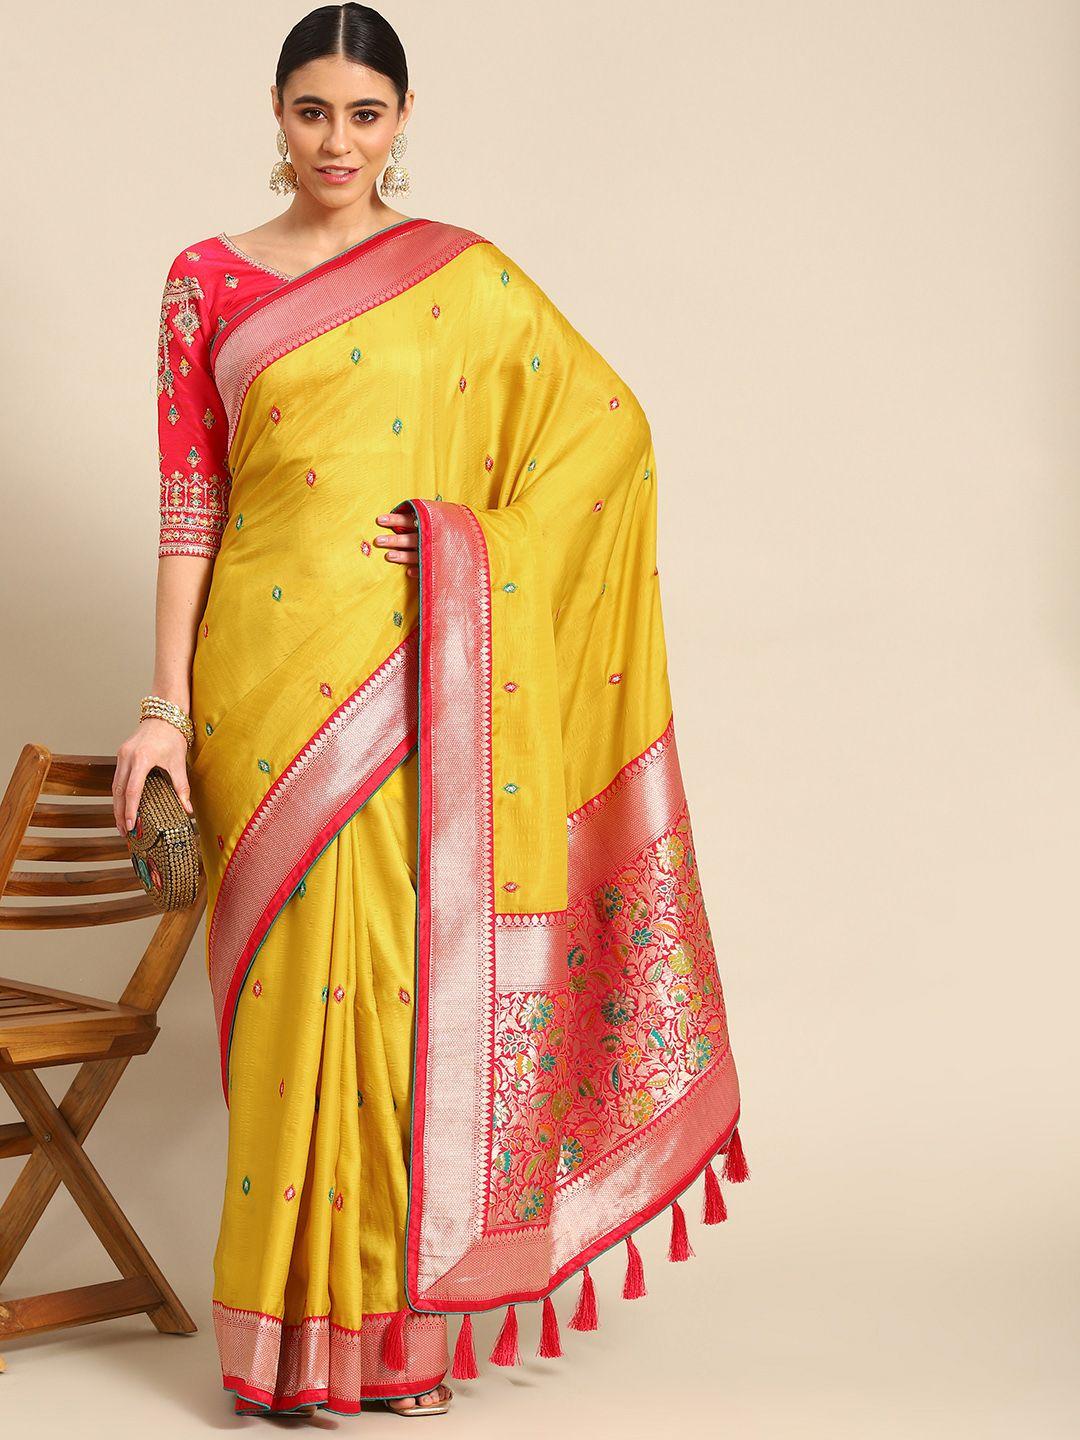 all about you yellow & pink ethnic motifs pure silk banarasi saree